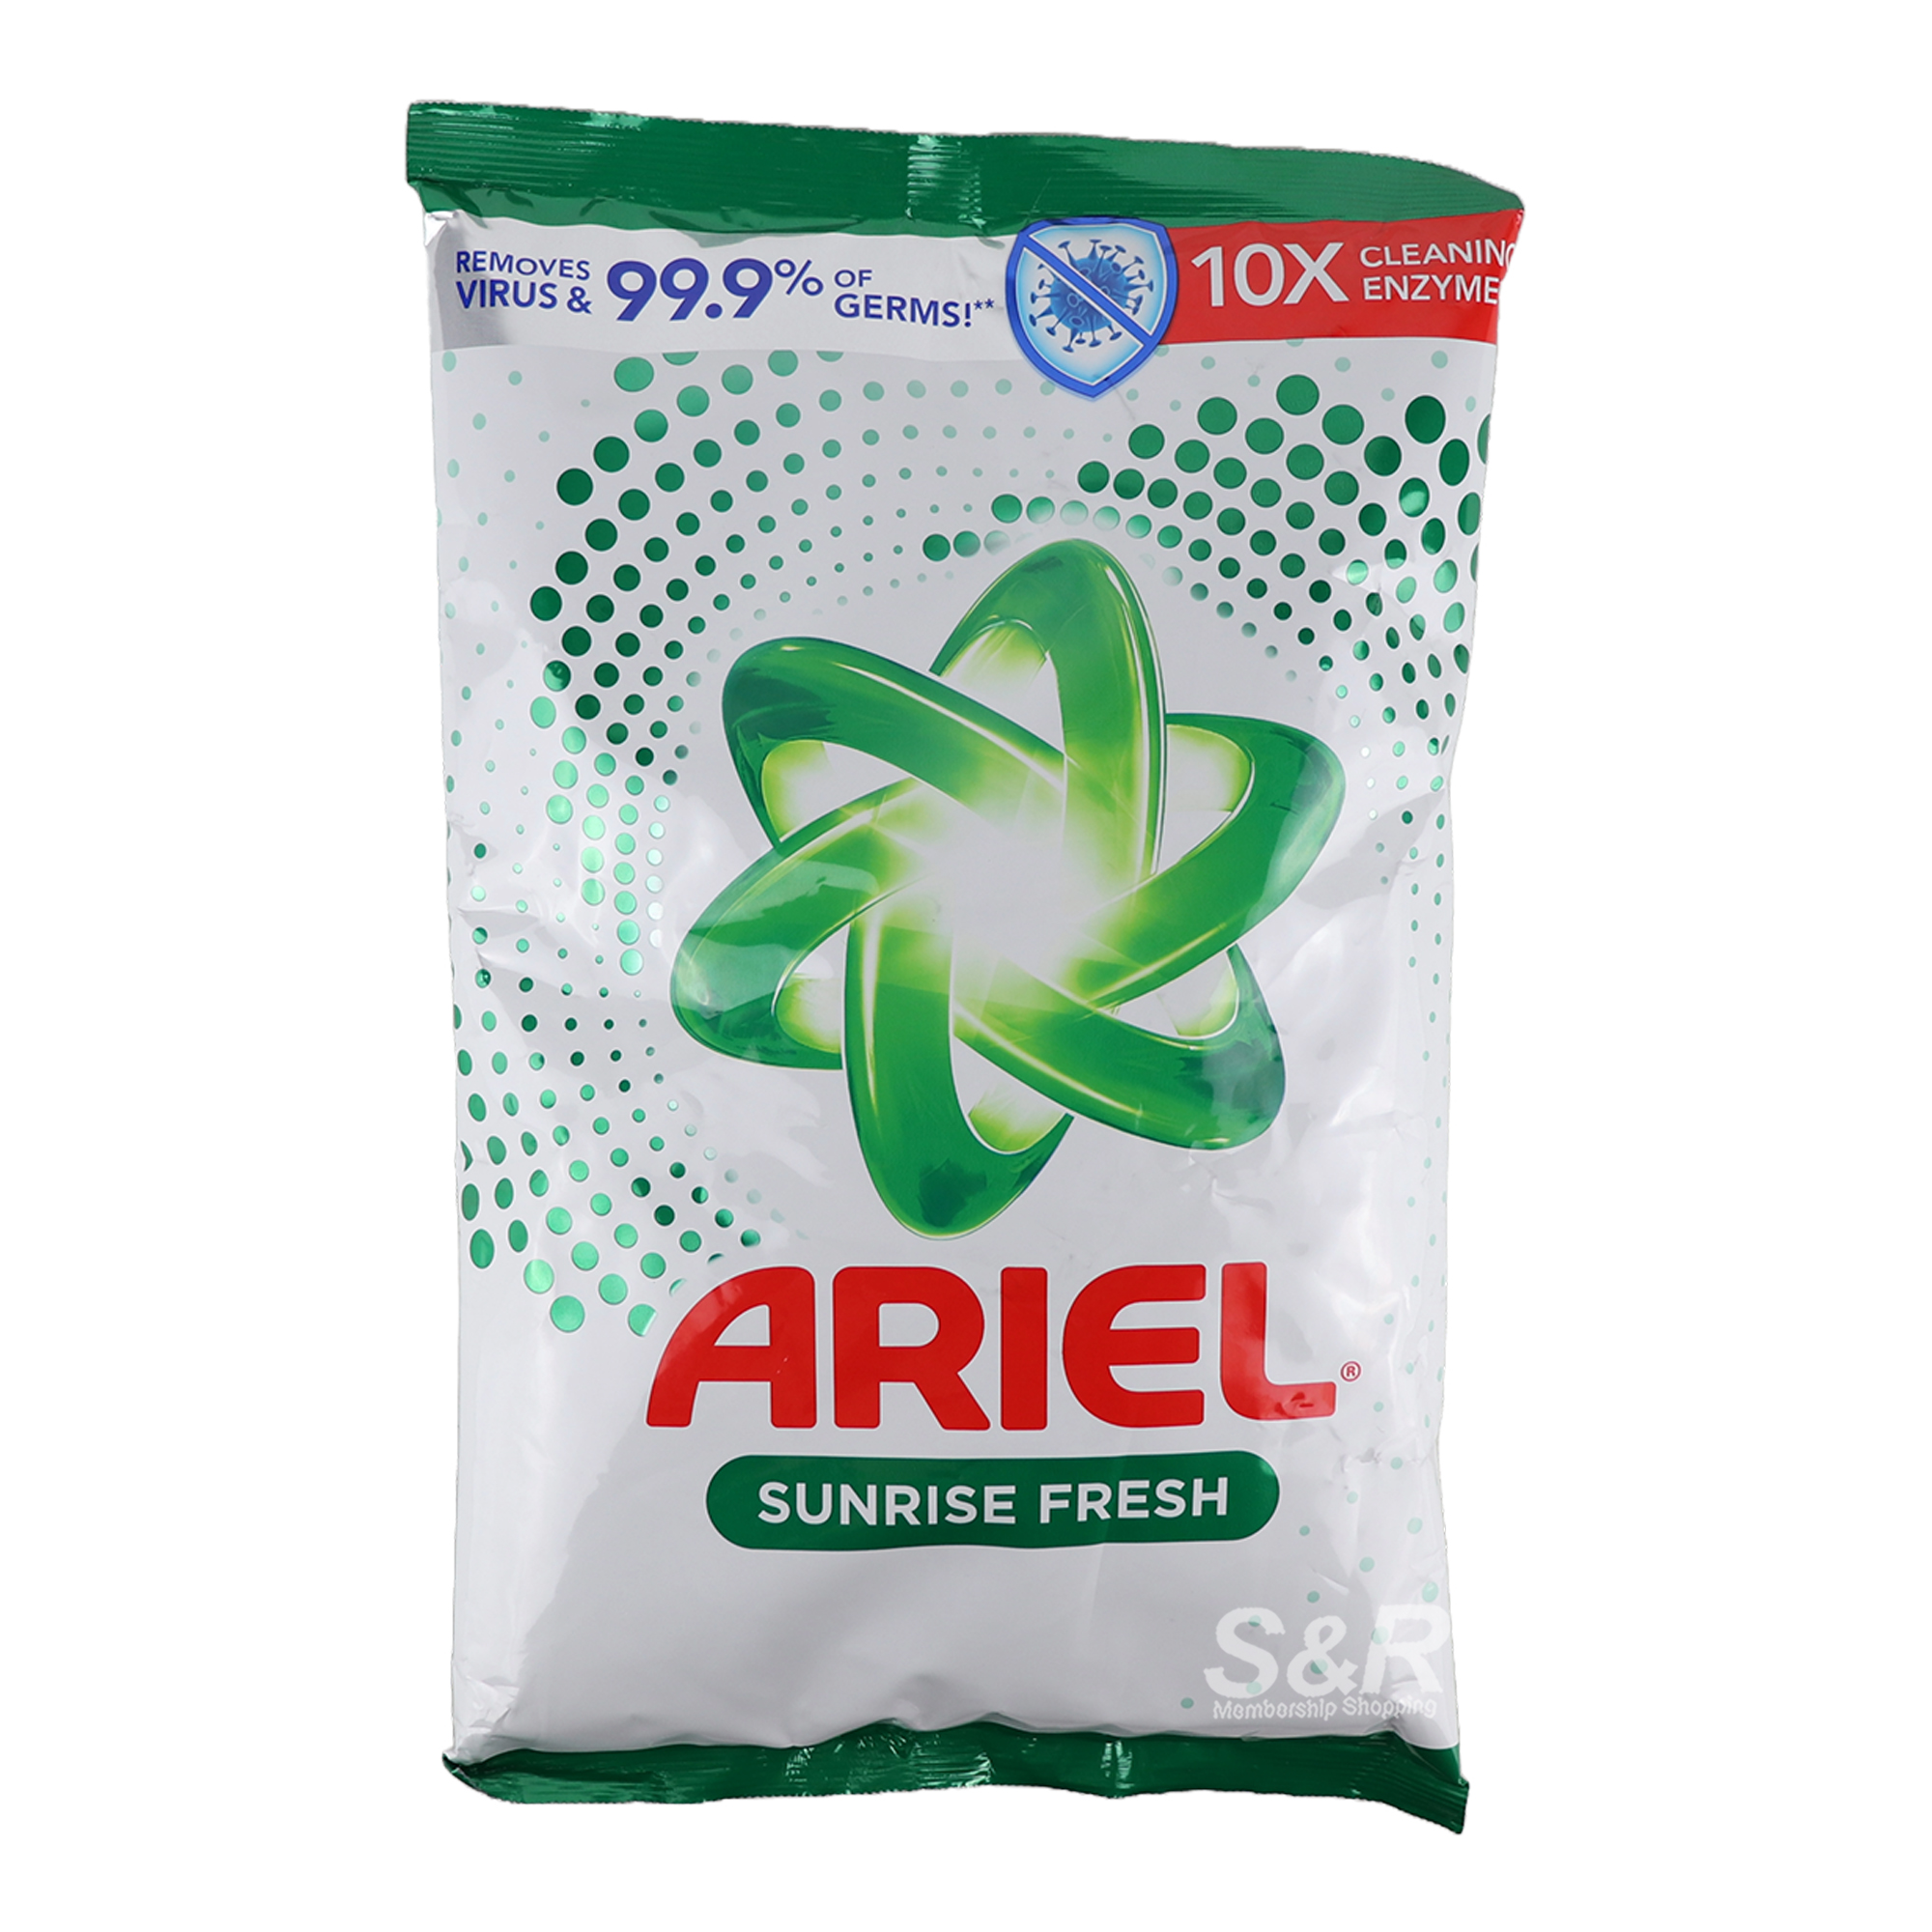 Ariel Sunrise Fresh Laundry Detergent 3.35kg